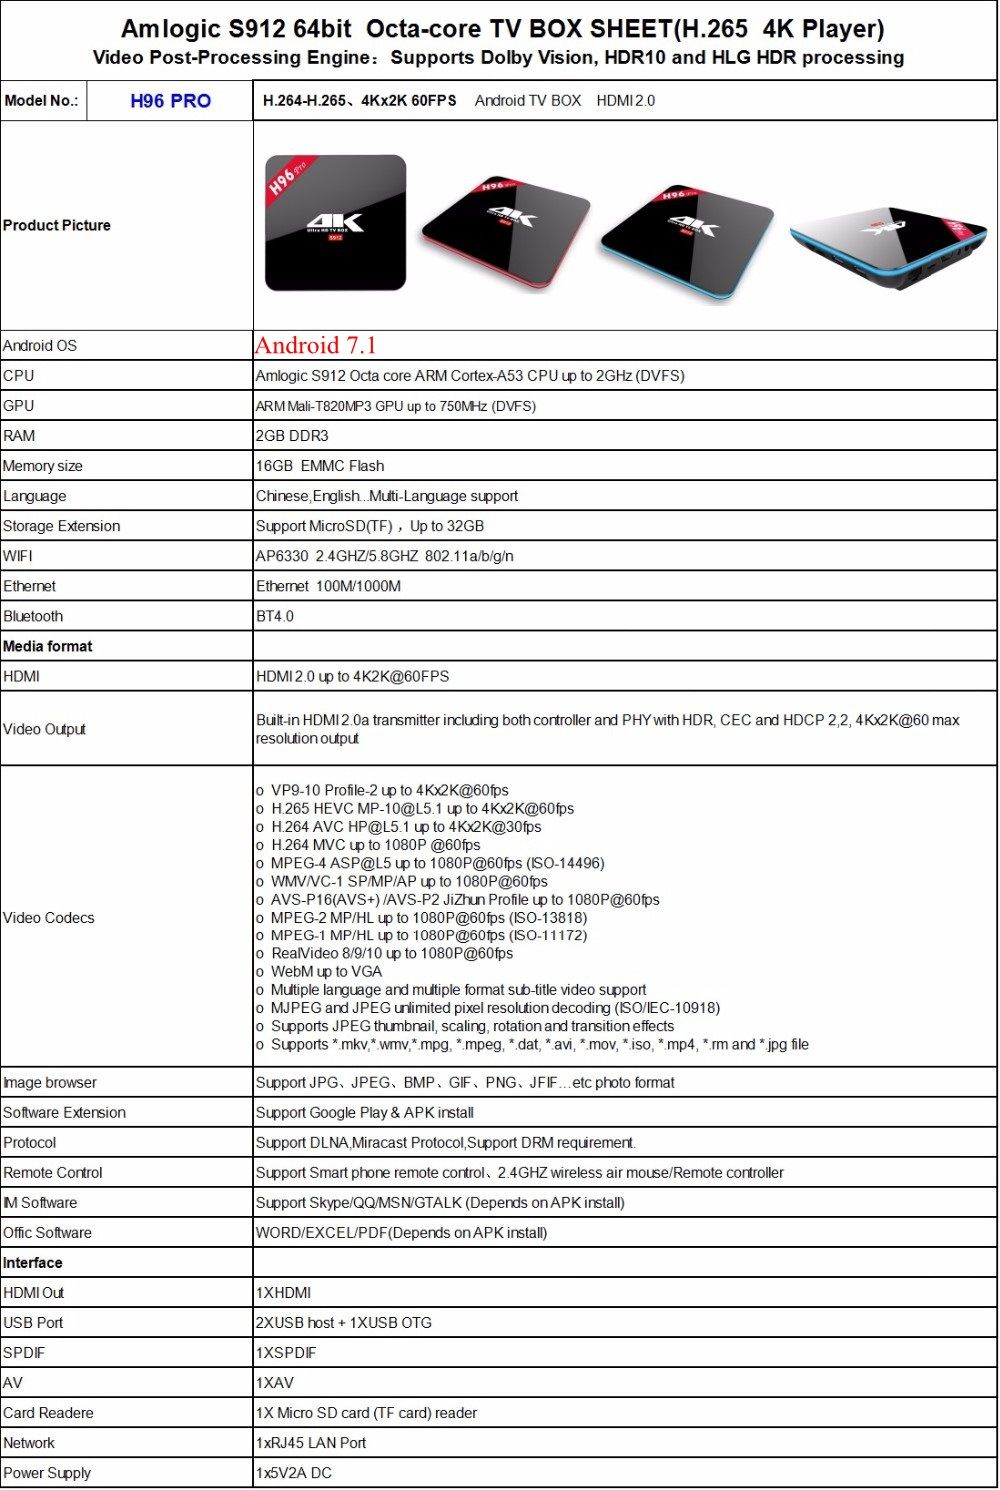 user manual for h96 pro 4k ultra hd tv box